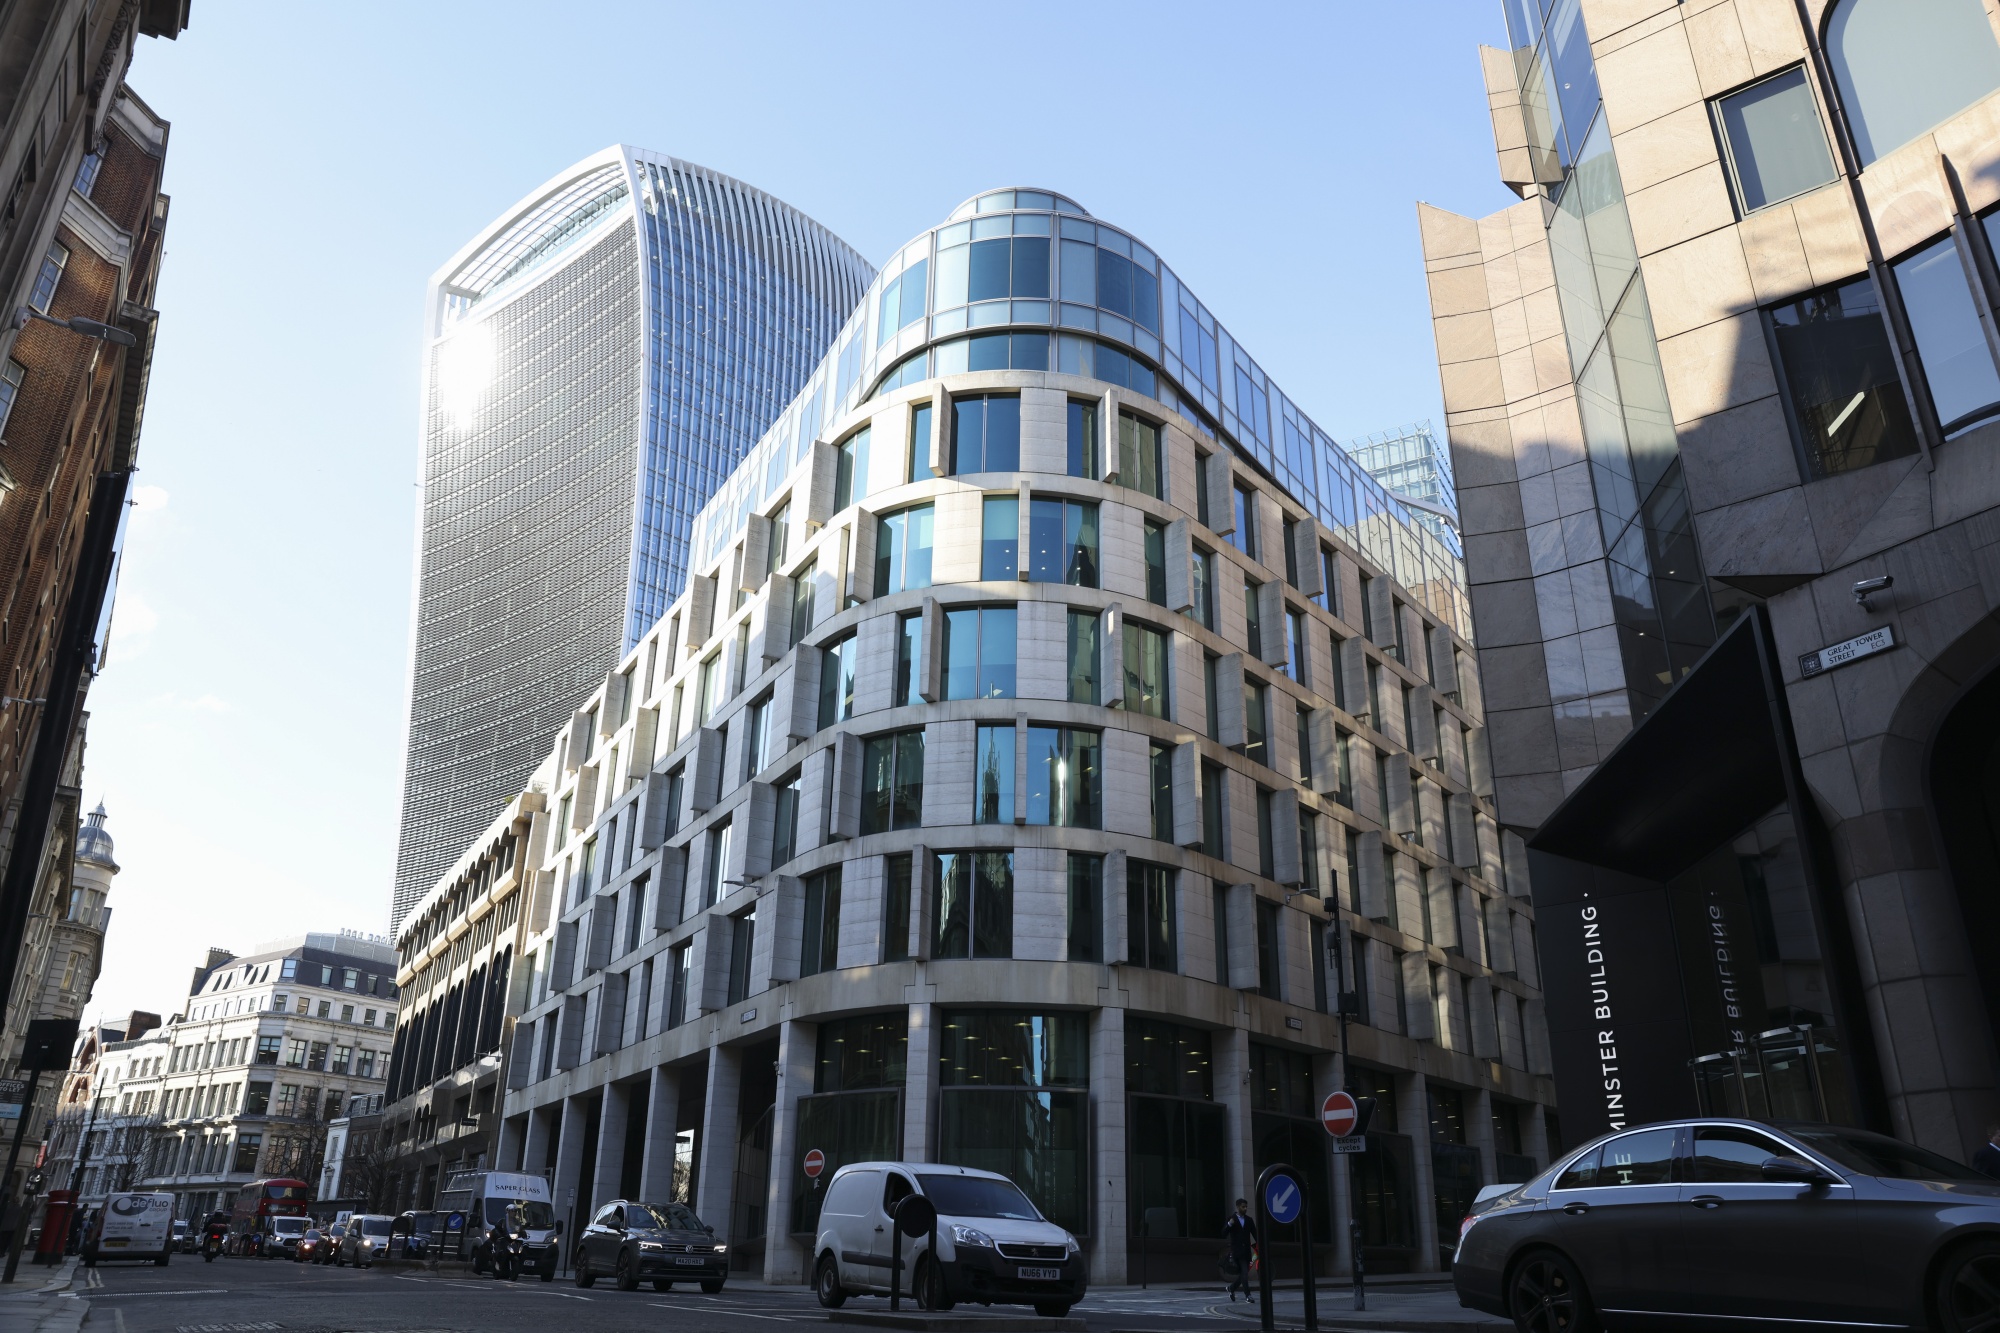 Billionaire Safra sells Bond Street block in £130m London property